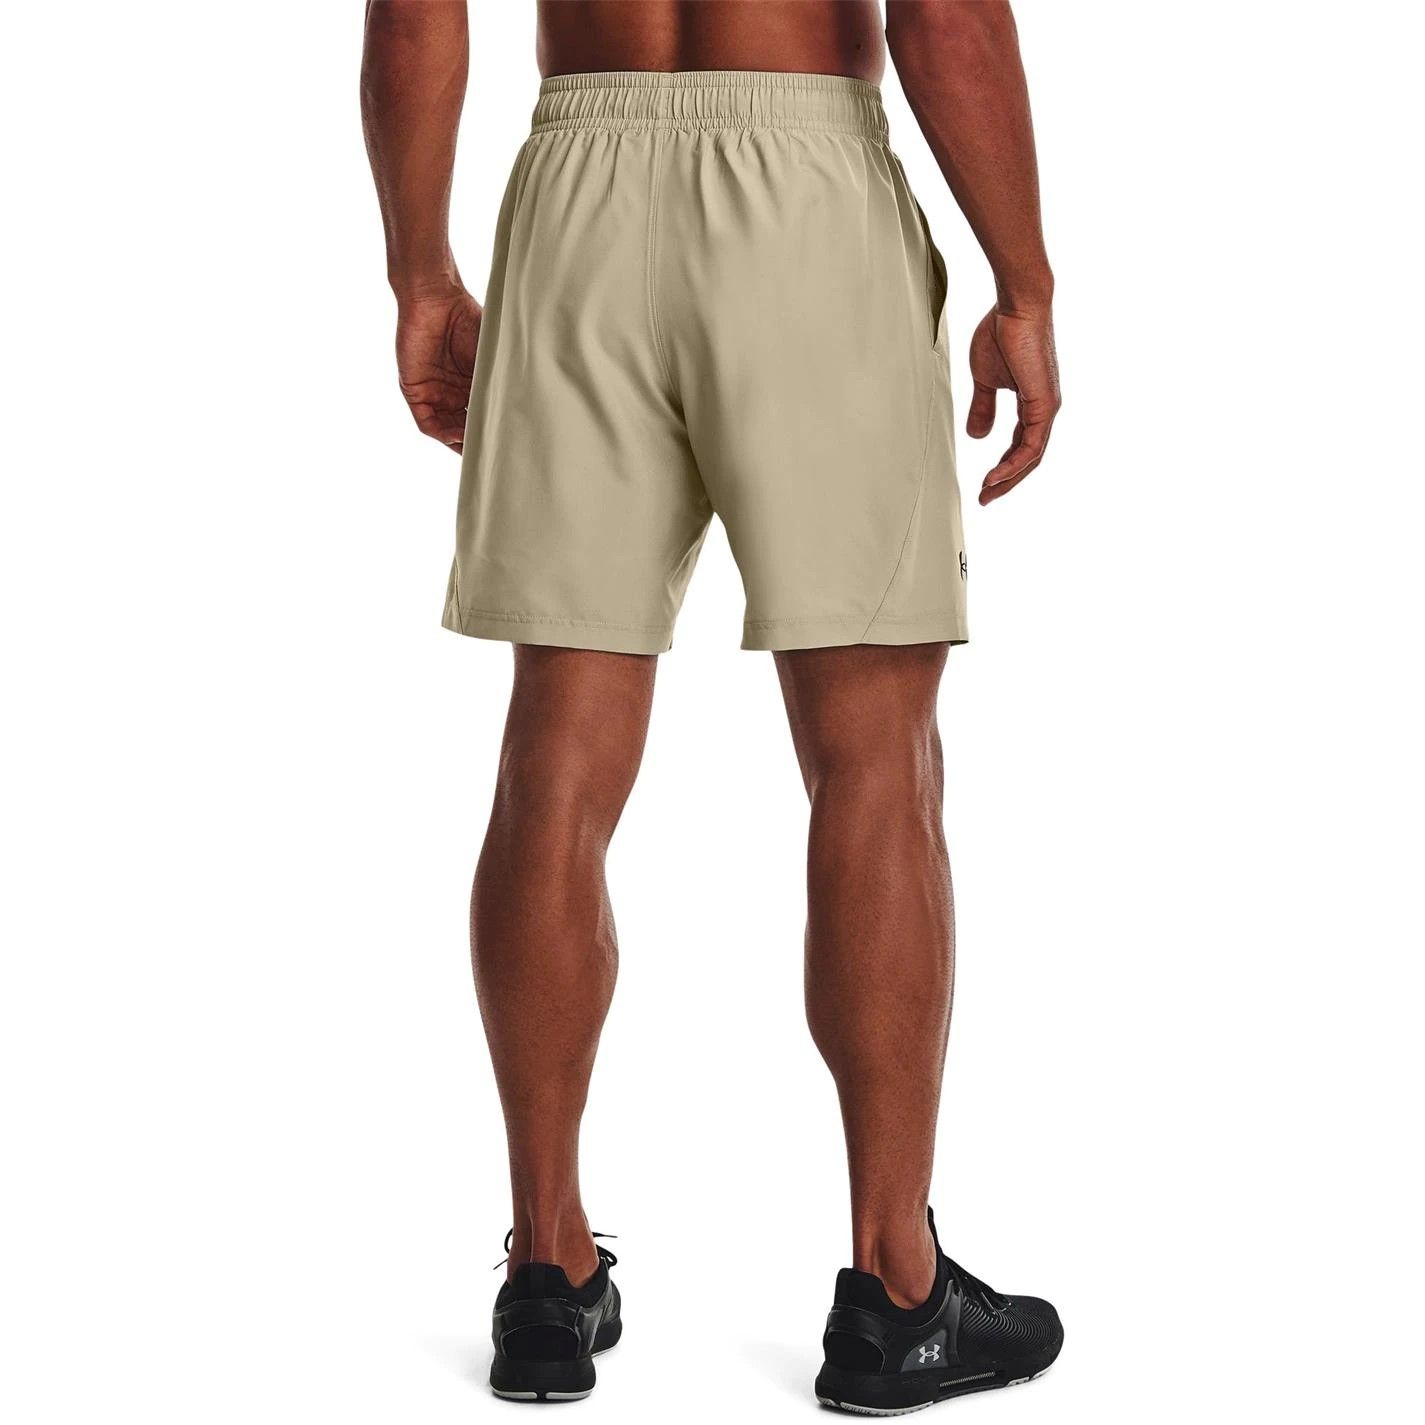 AE, Limitless 2-in-1 Shorts - Khaki And Black, Gym Shorts Men